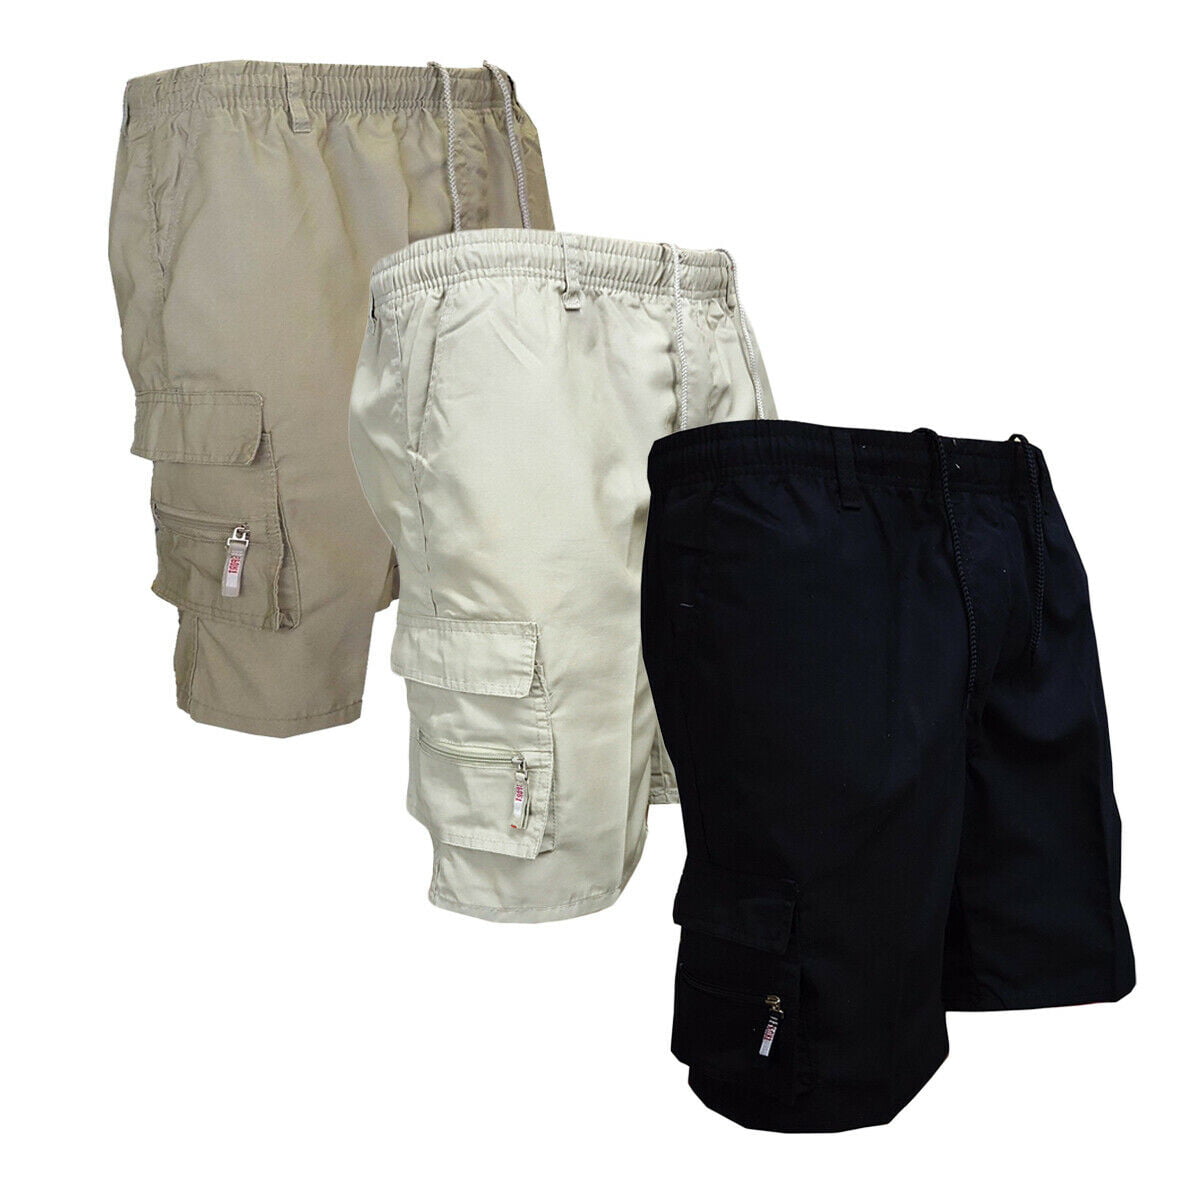 Palarn Sports Pants Casual Cargo Shorts Men Casual 3D Graffiti Printed Beach Work Casual Men Short Trouser Shorts Pants